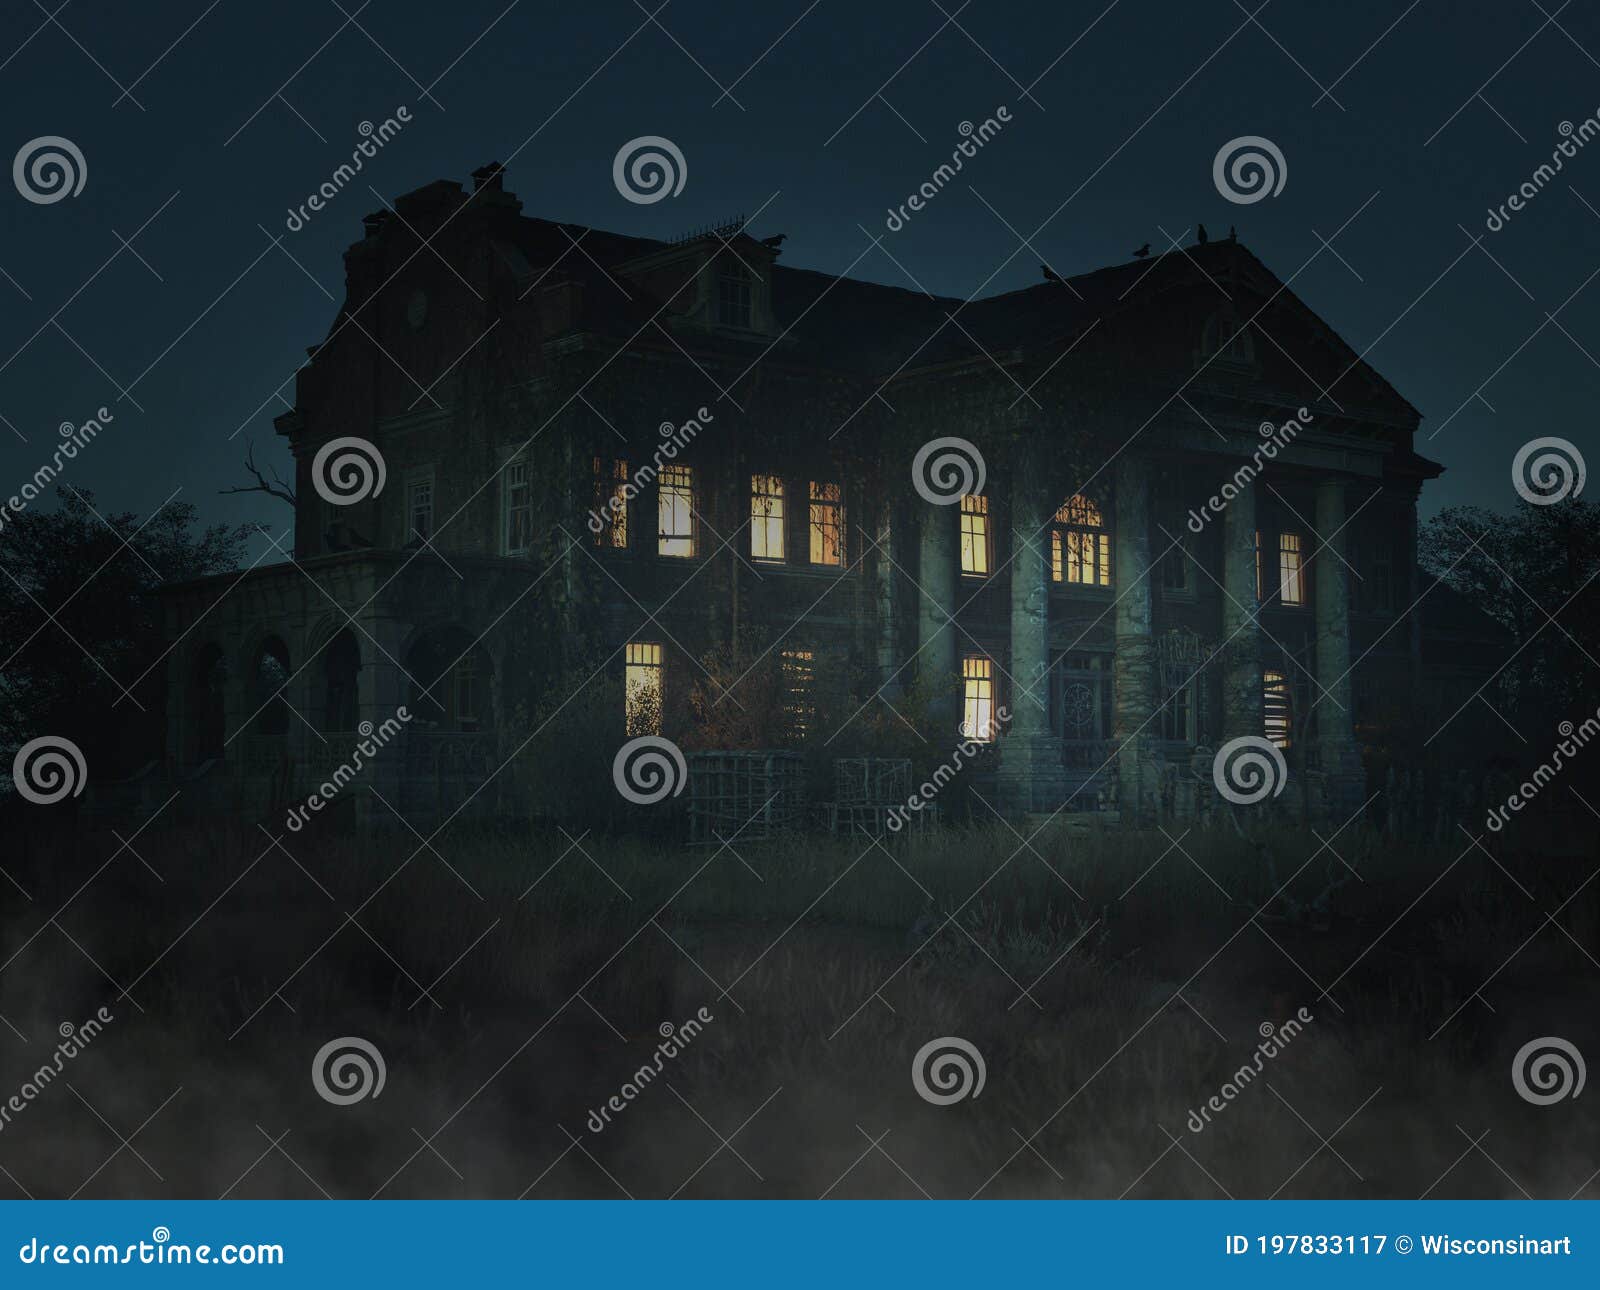 halloween haunted house, mansion, night